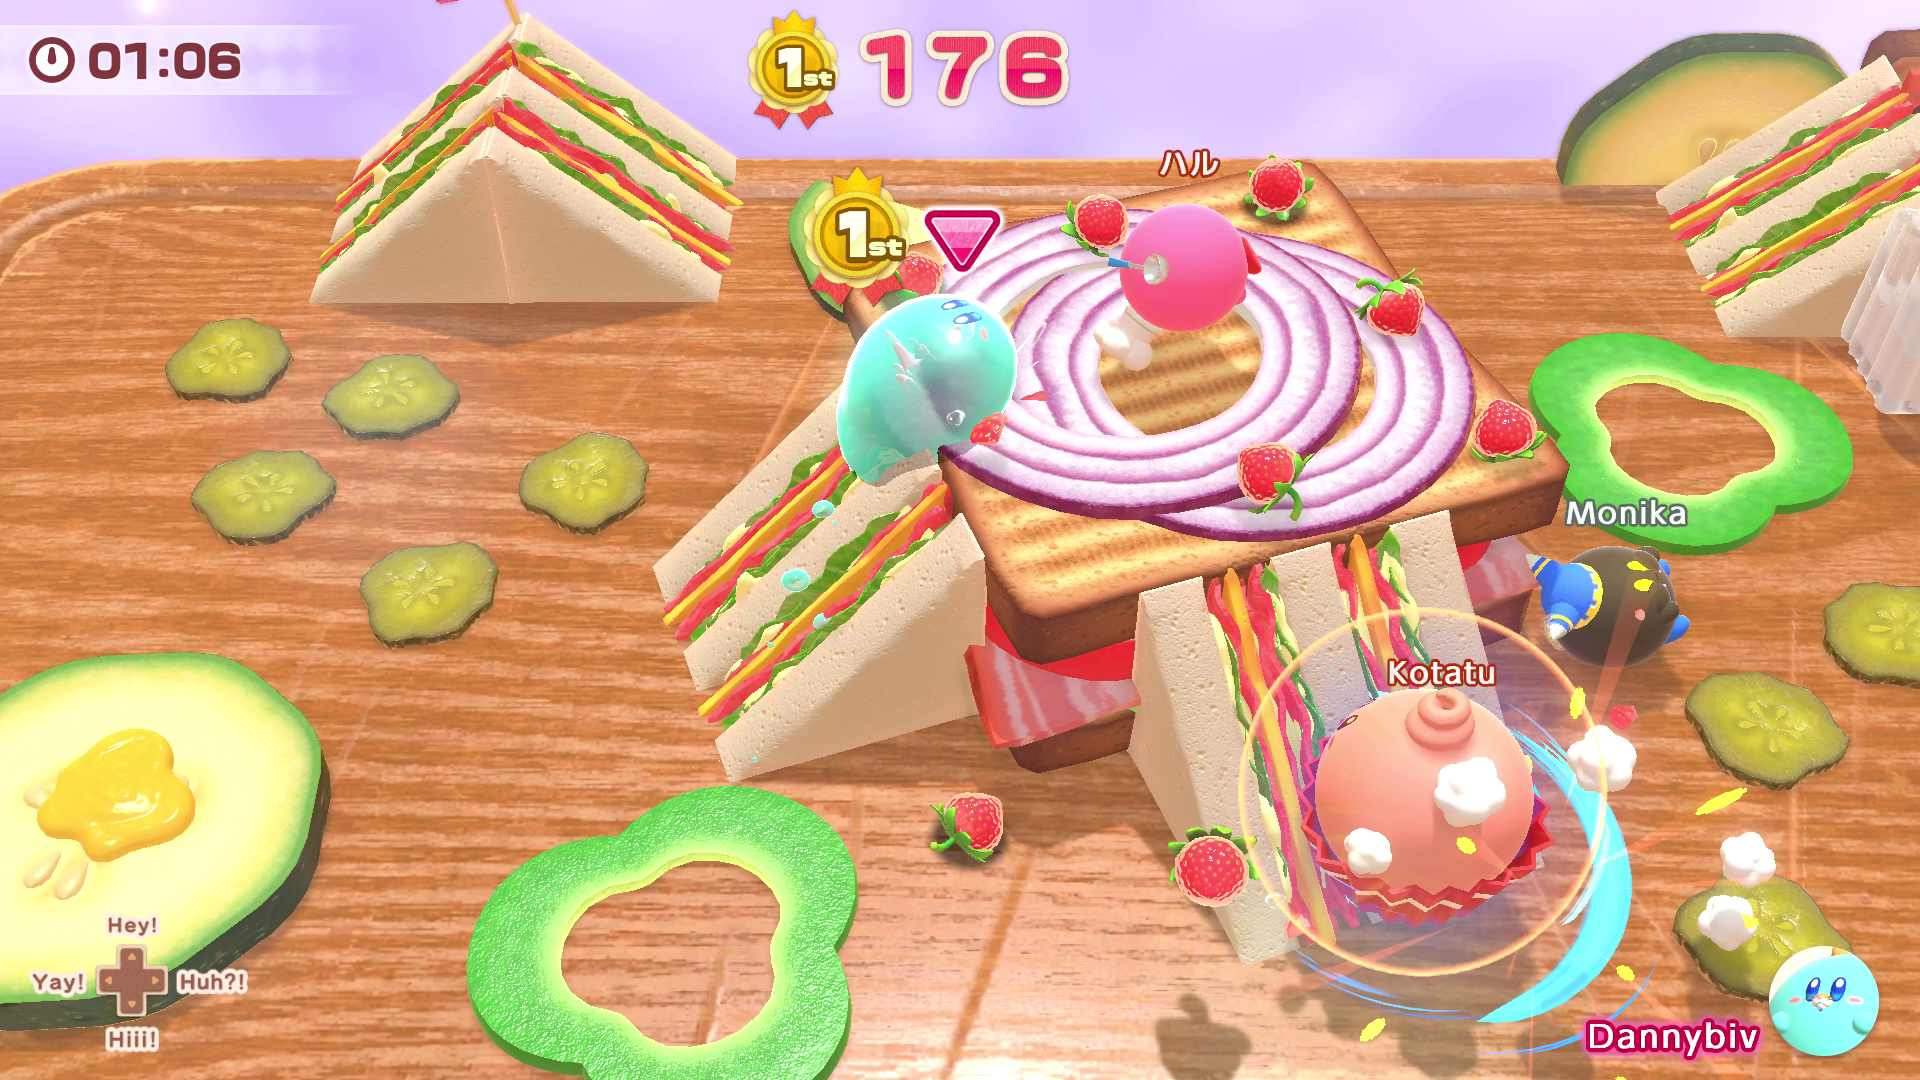 Kirby's Dream Buffet - Online Multiplayer Gameplay! 